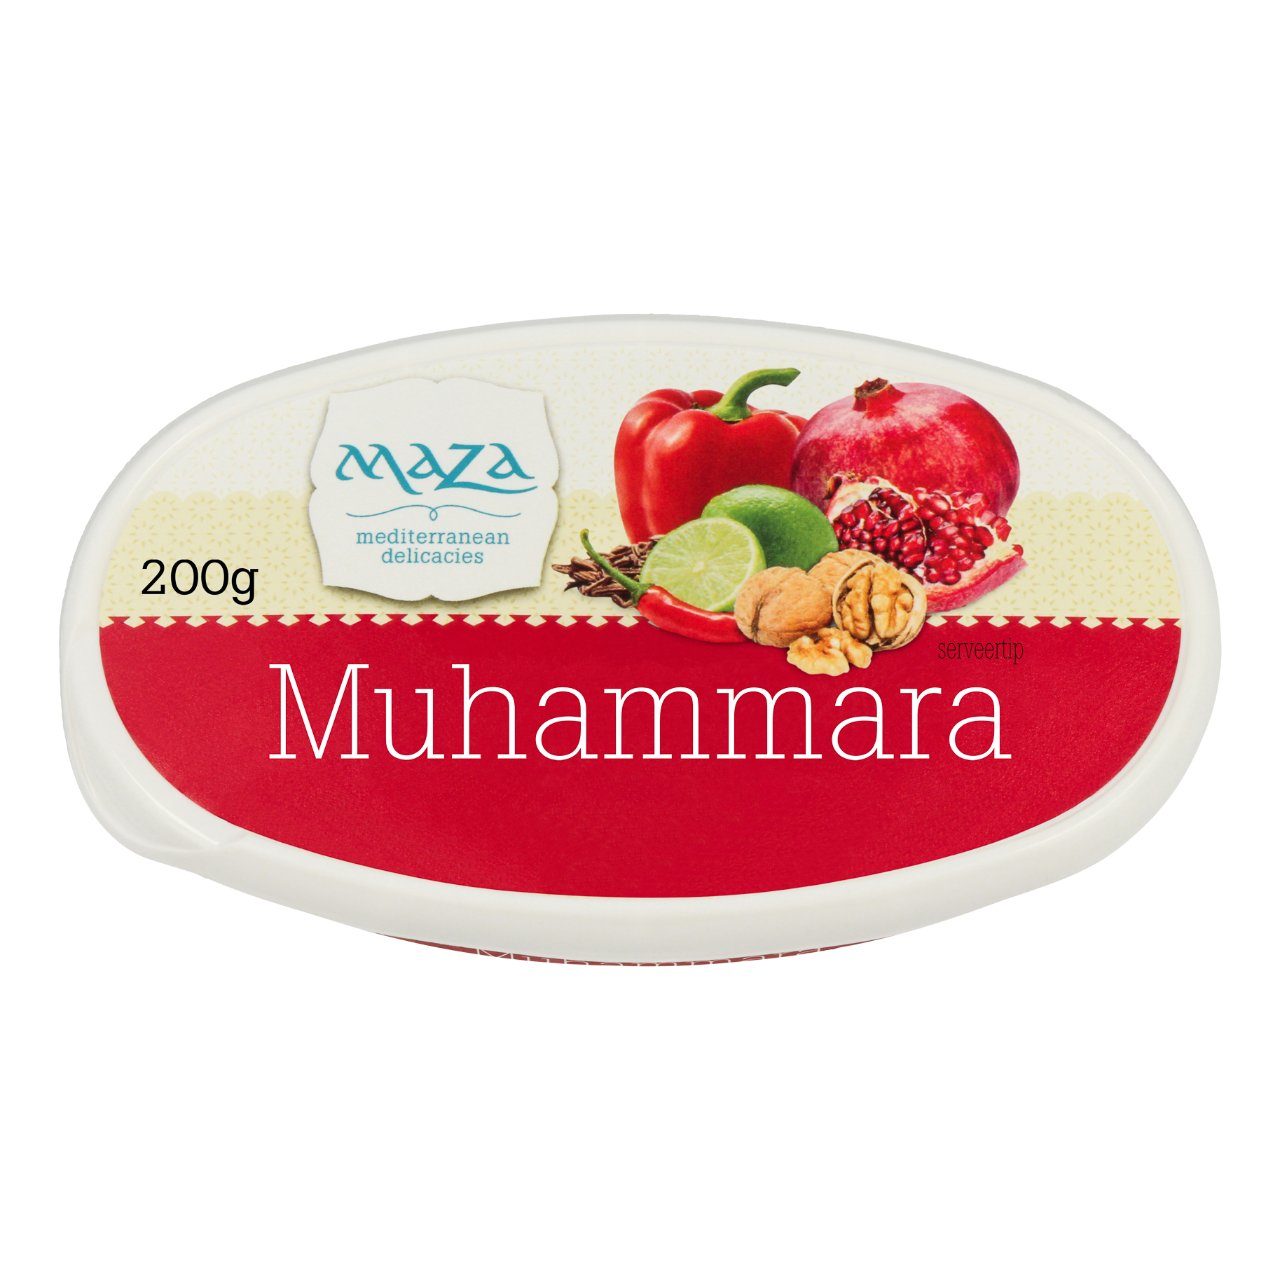 Muhammara